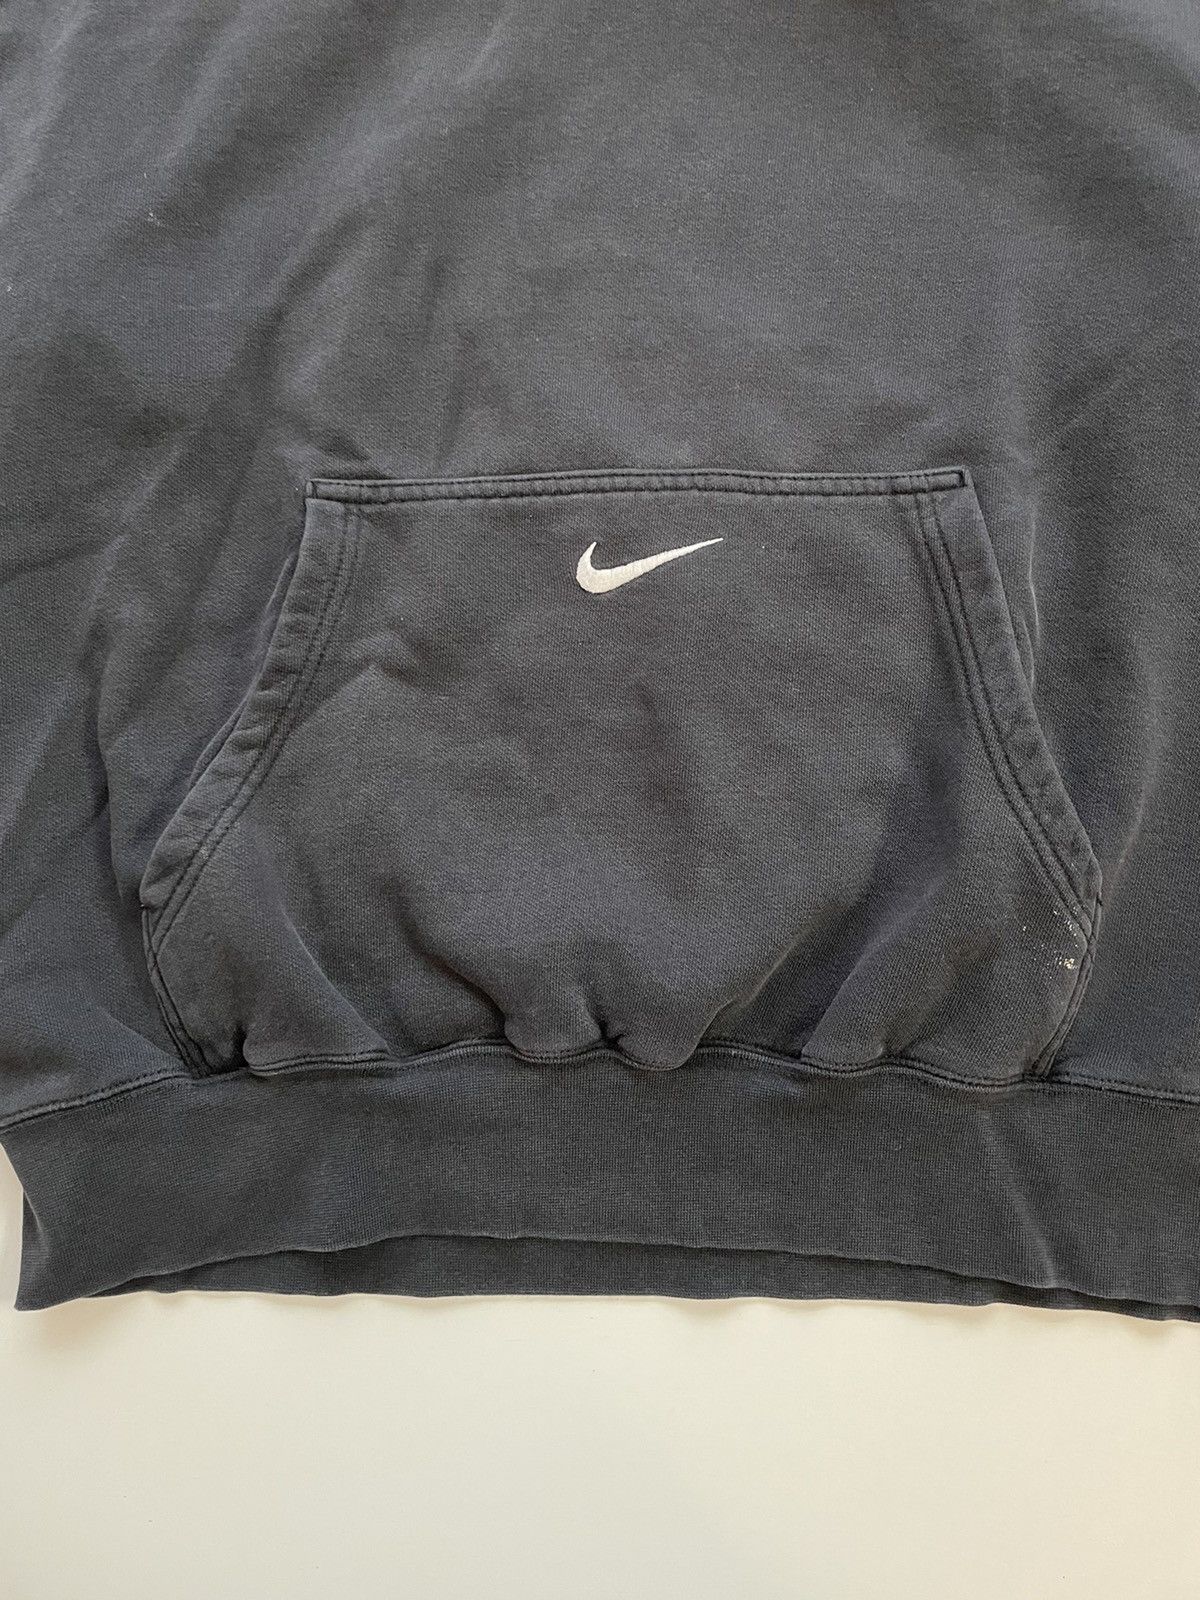 Nike Vintage Nike Middle Pocket Swoosh 90s Hoodie Black XL Hype Size US XL / EU 56 / 4 - 9 Thumbnail